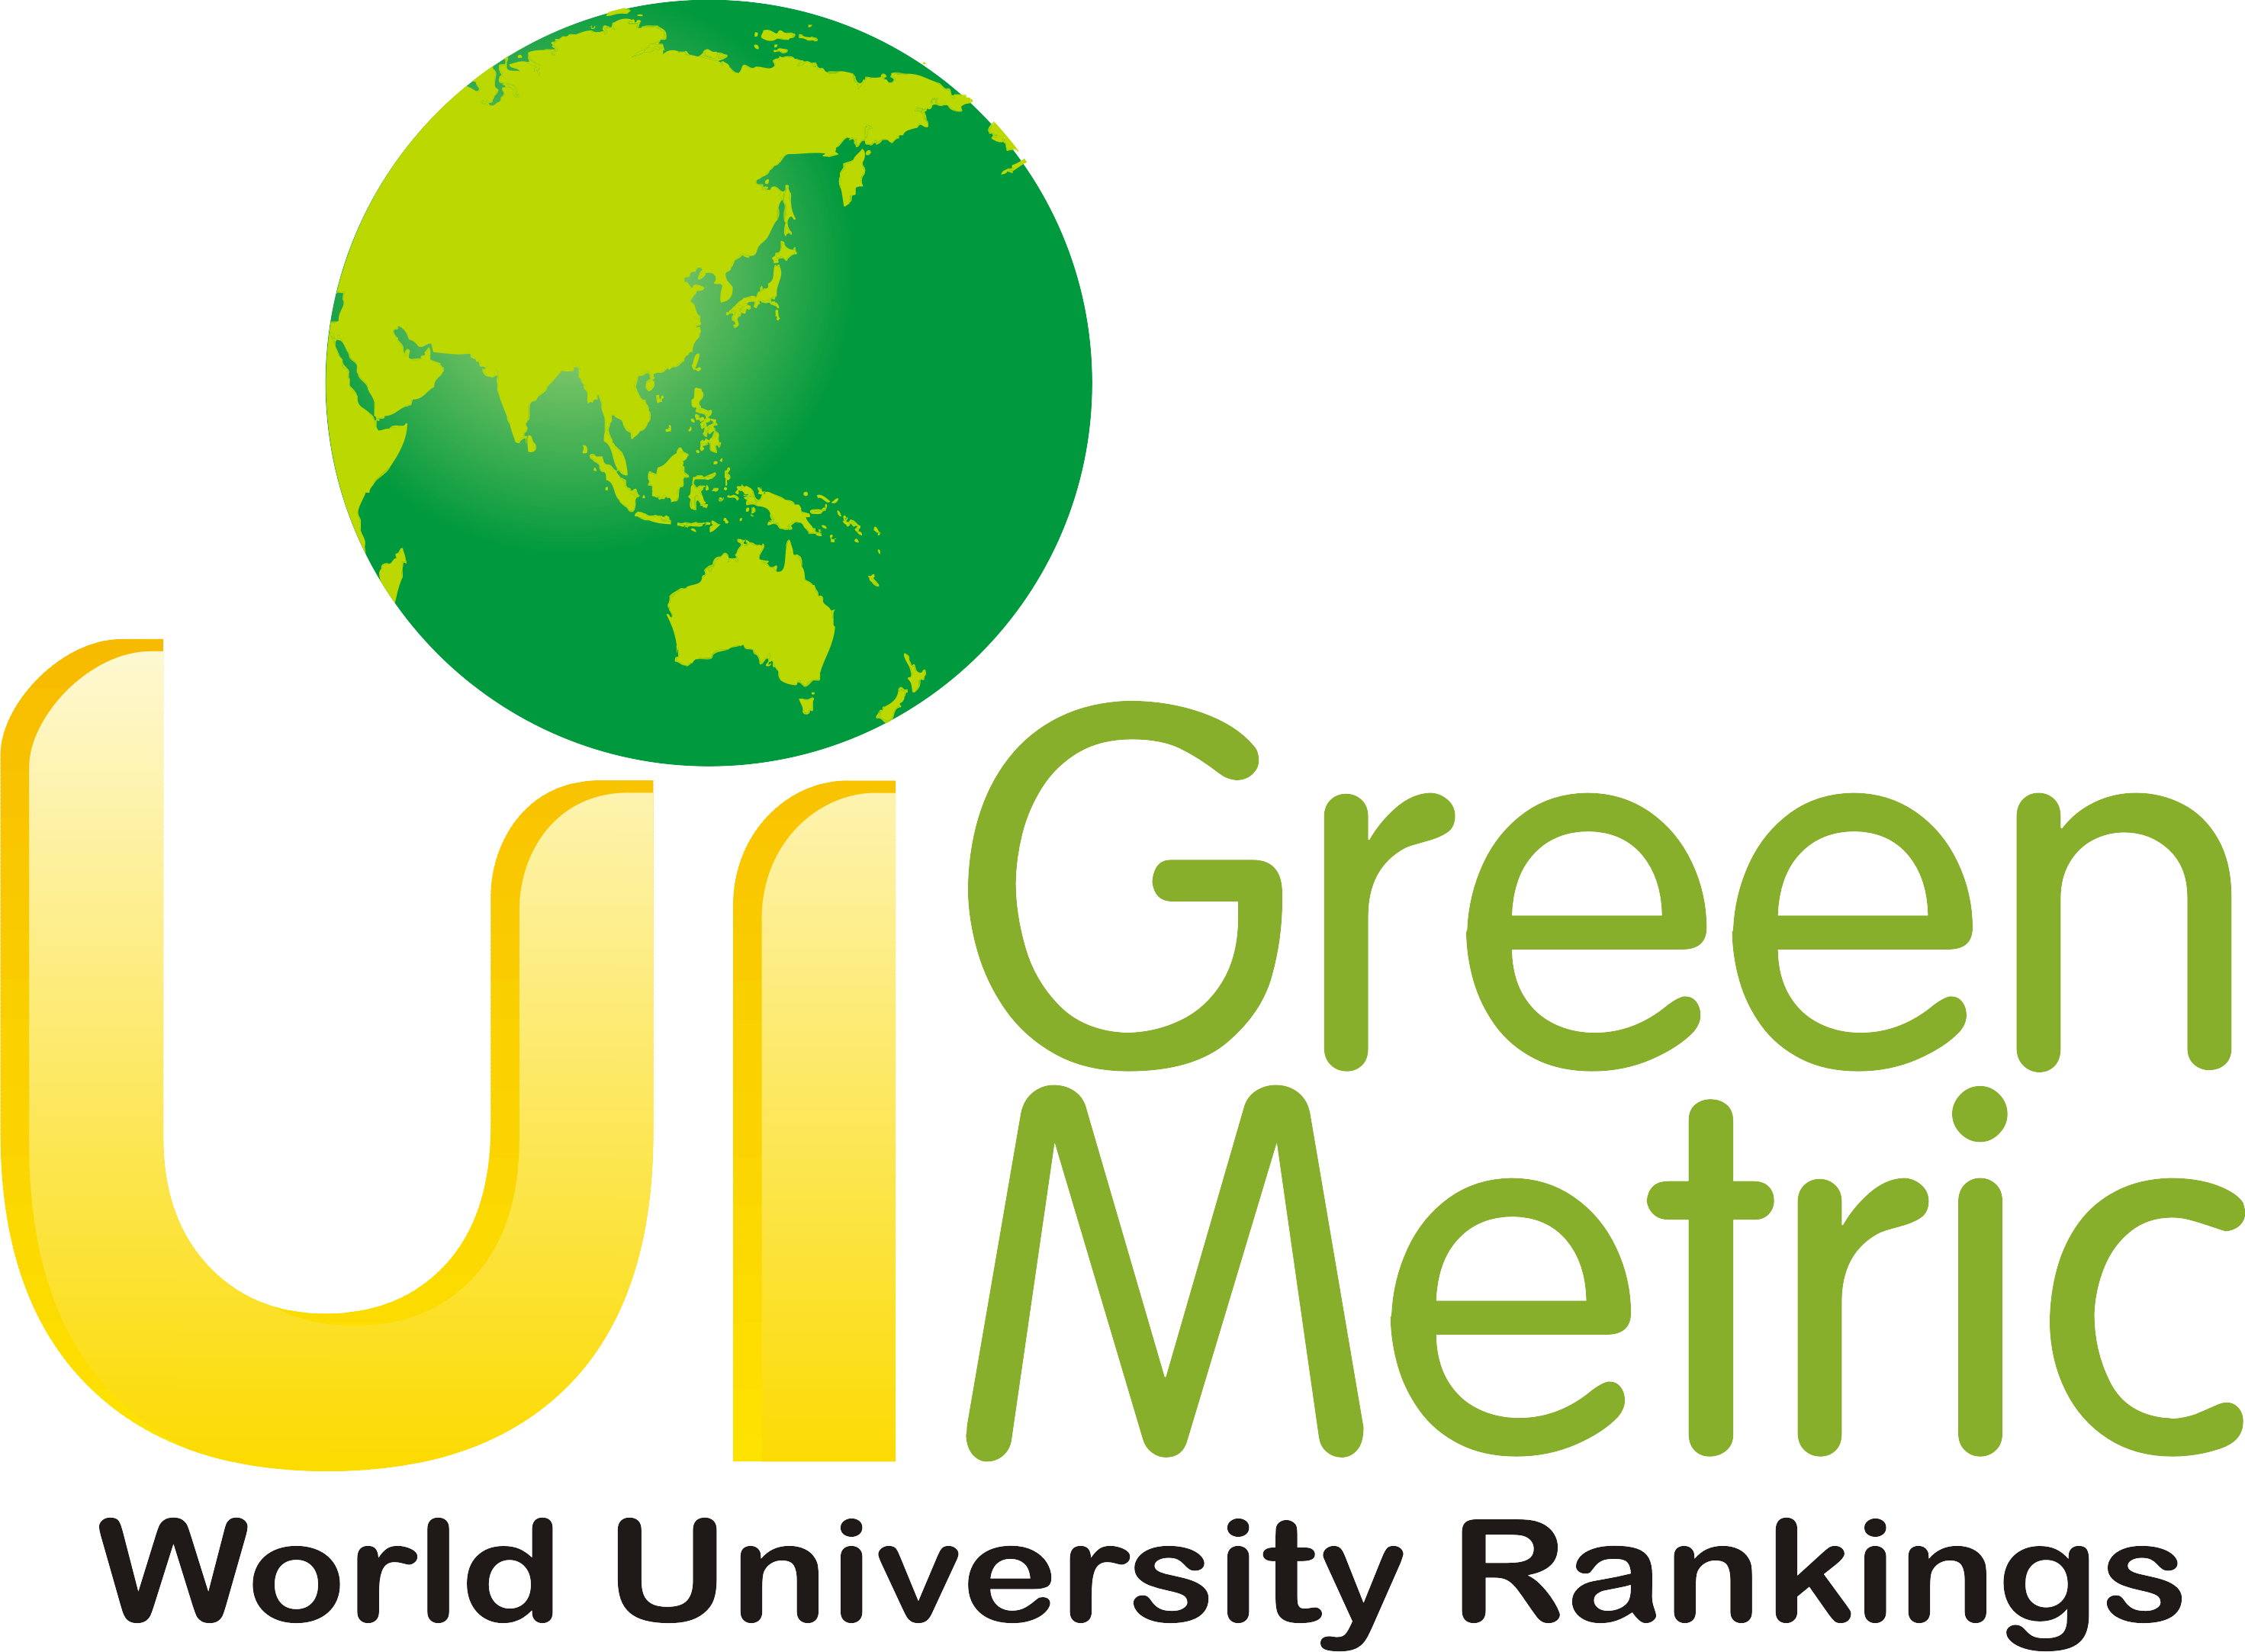 UI GreenMetric World University Ranking